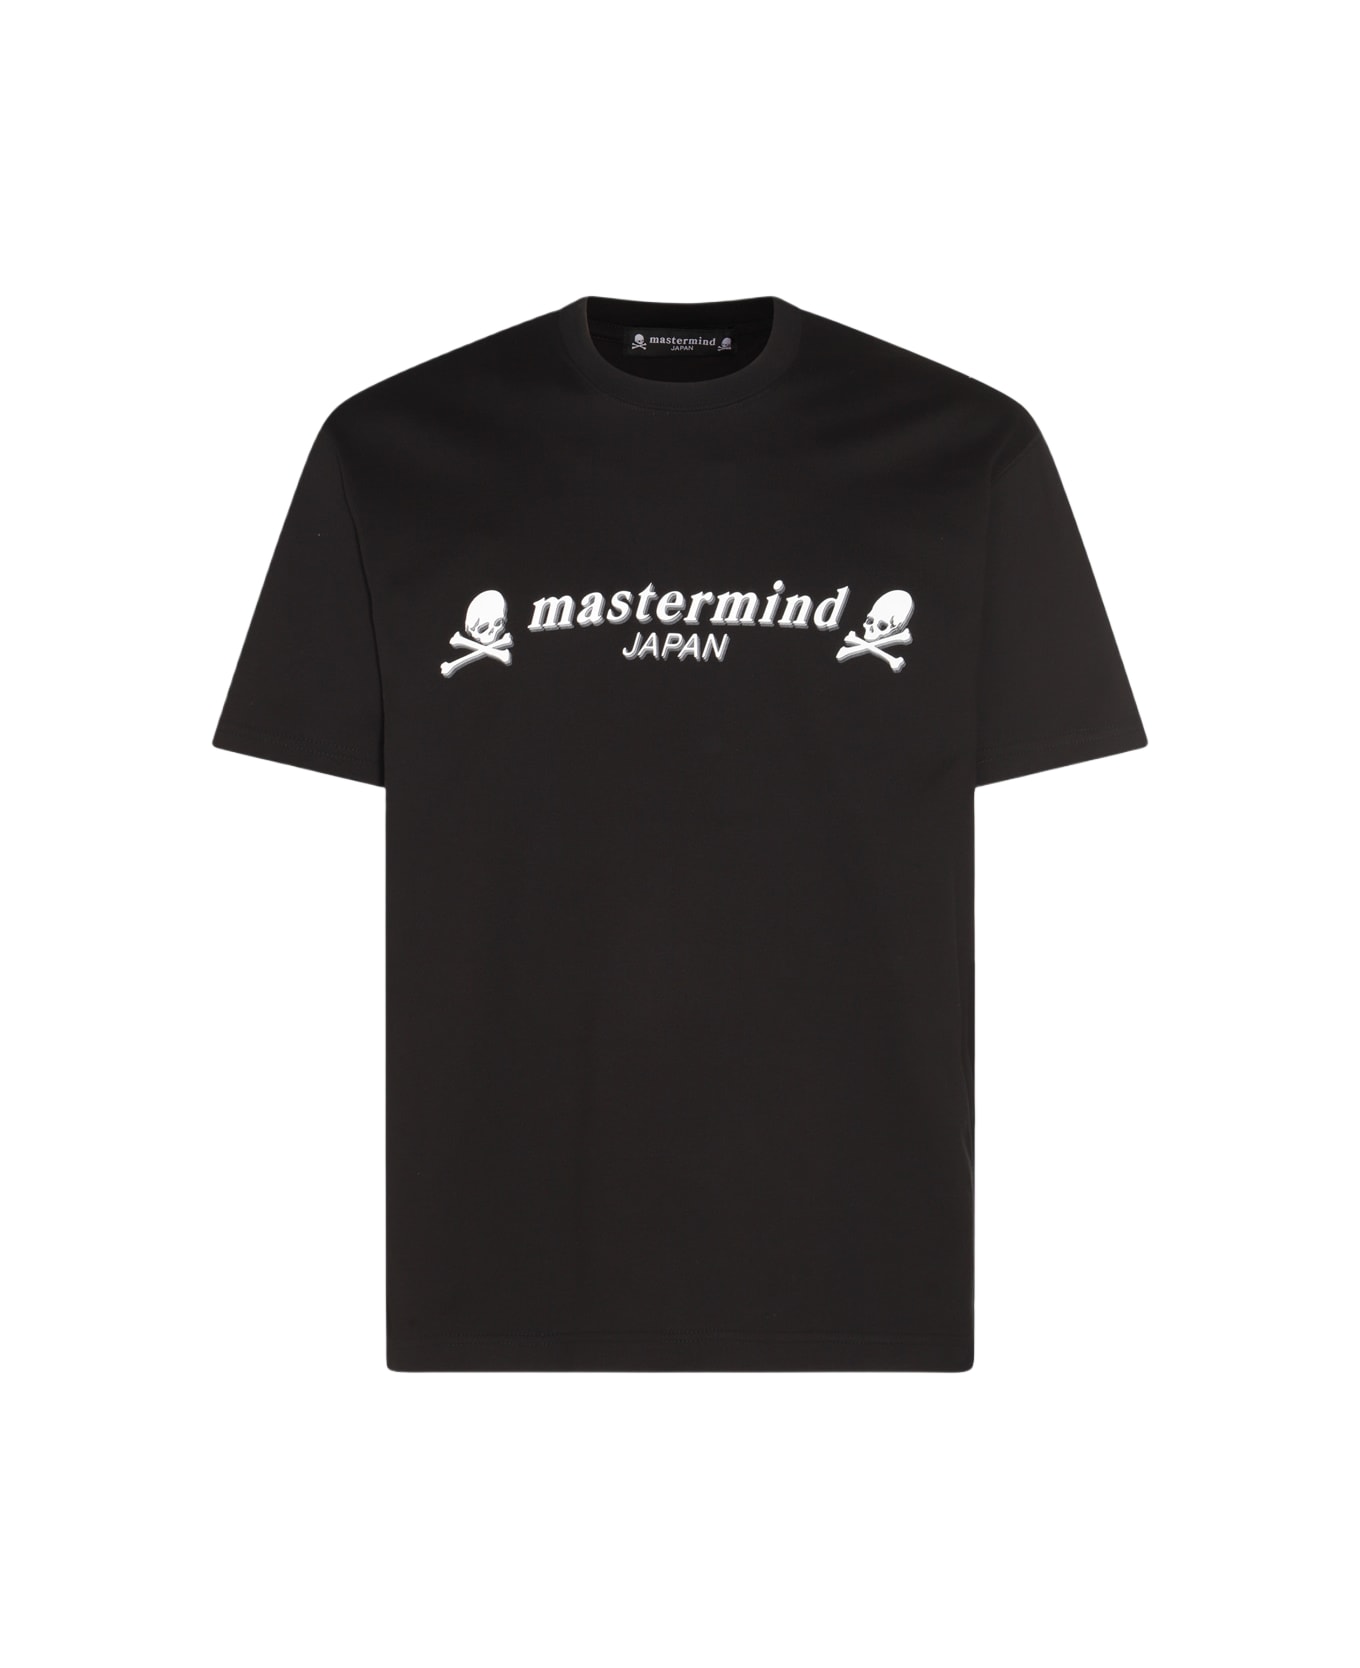 Mastermind Japan Black And White Cotton T-shirt - Black